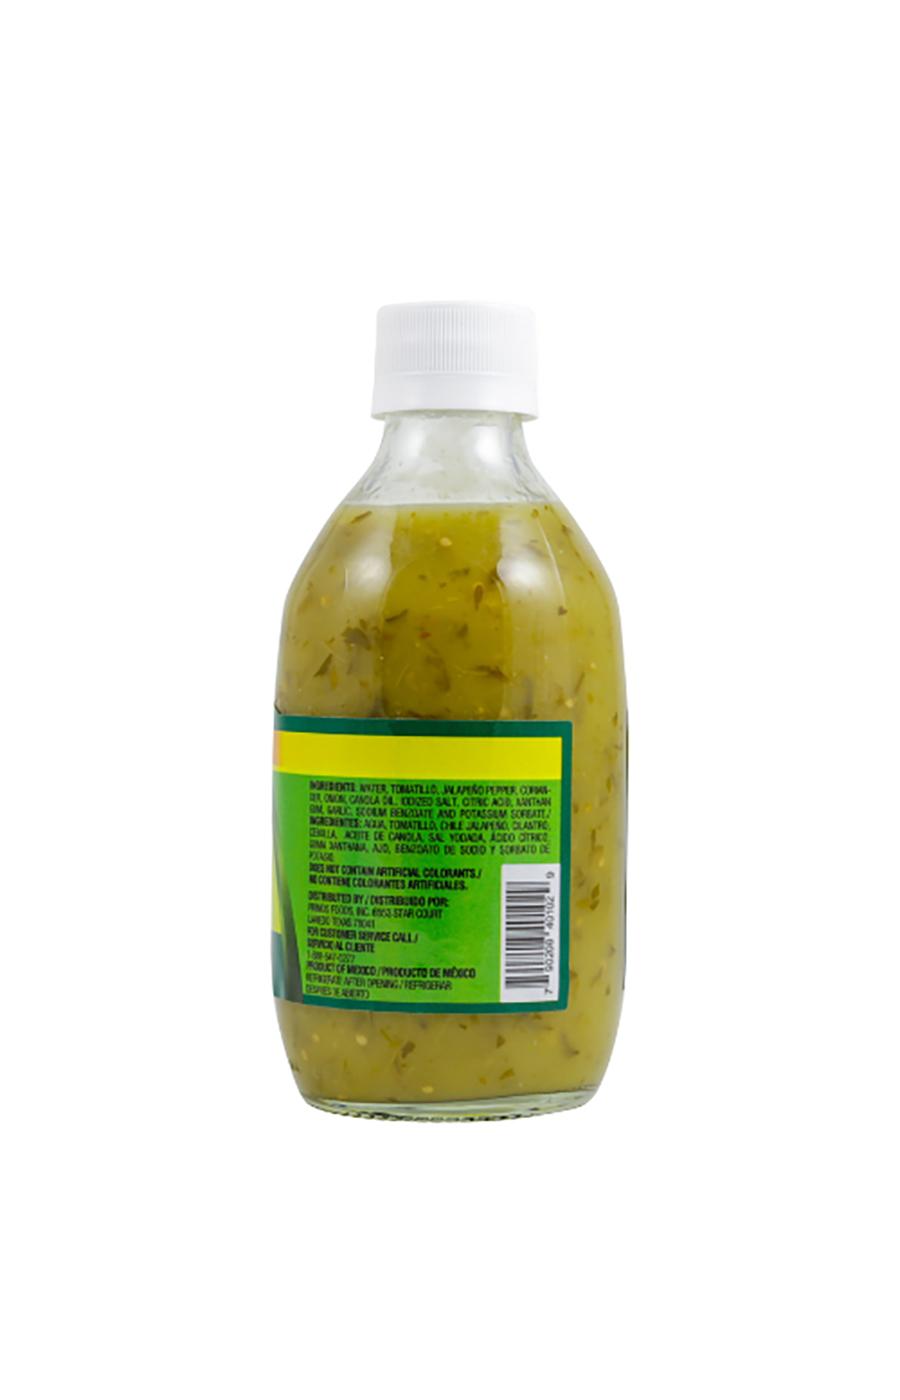 Del Primo Salsa Verde Green Sauce; image 3 of 3